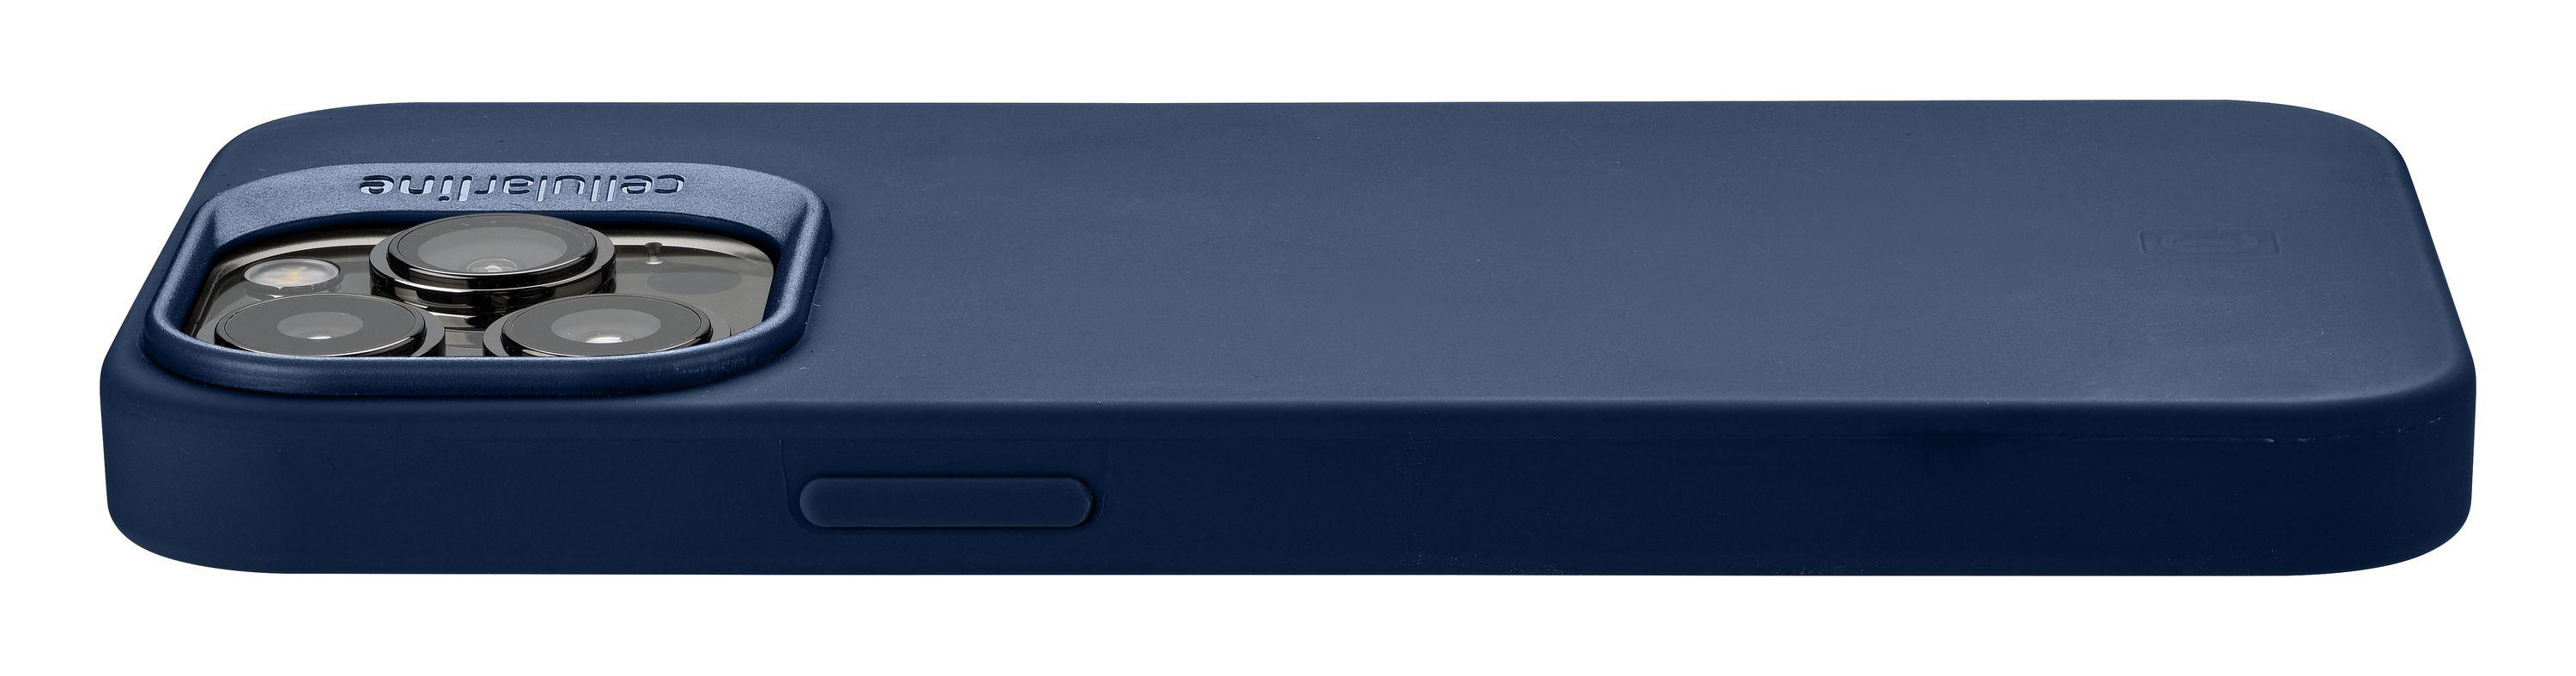 Sensation, PRO 14 Apple, iPhone Backcover, LINE Blue MAX, CELLULAR